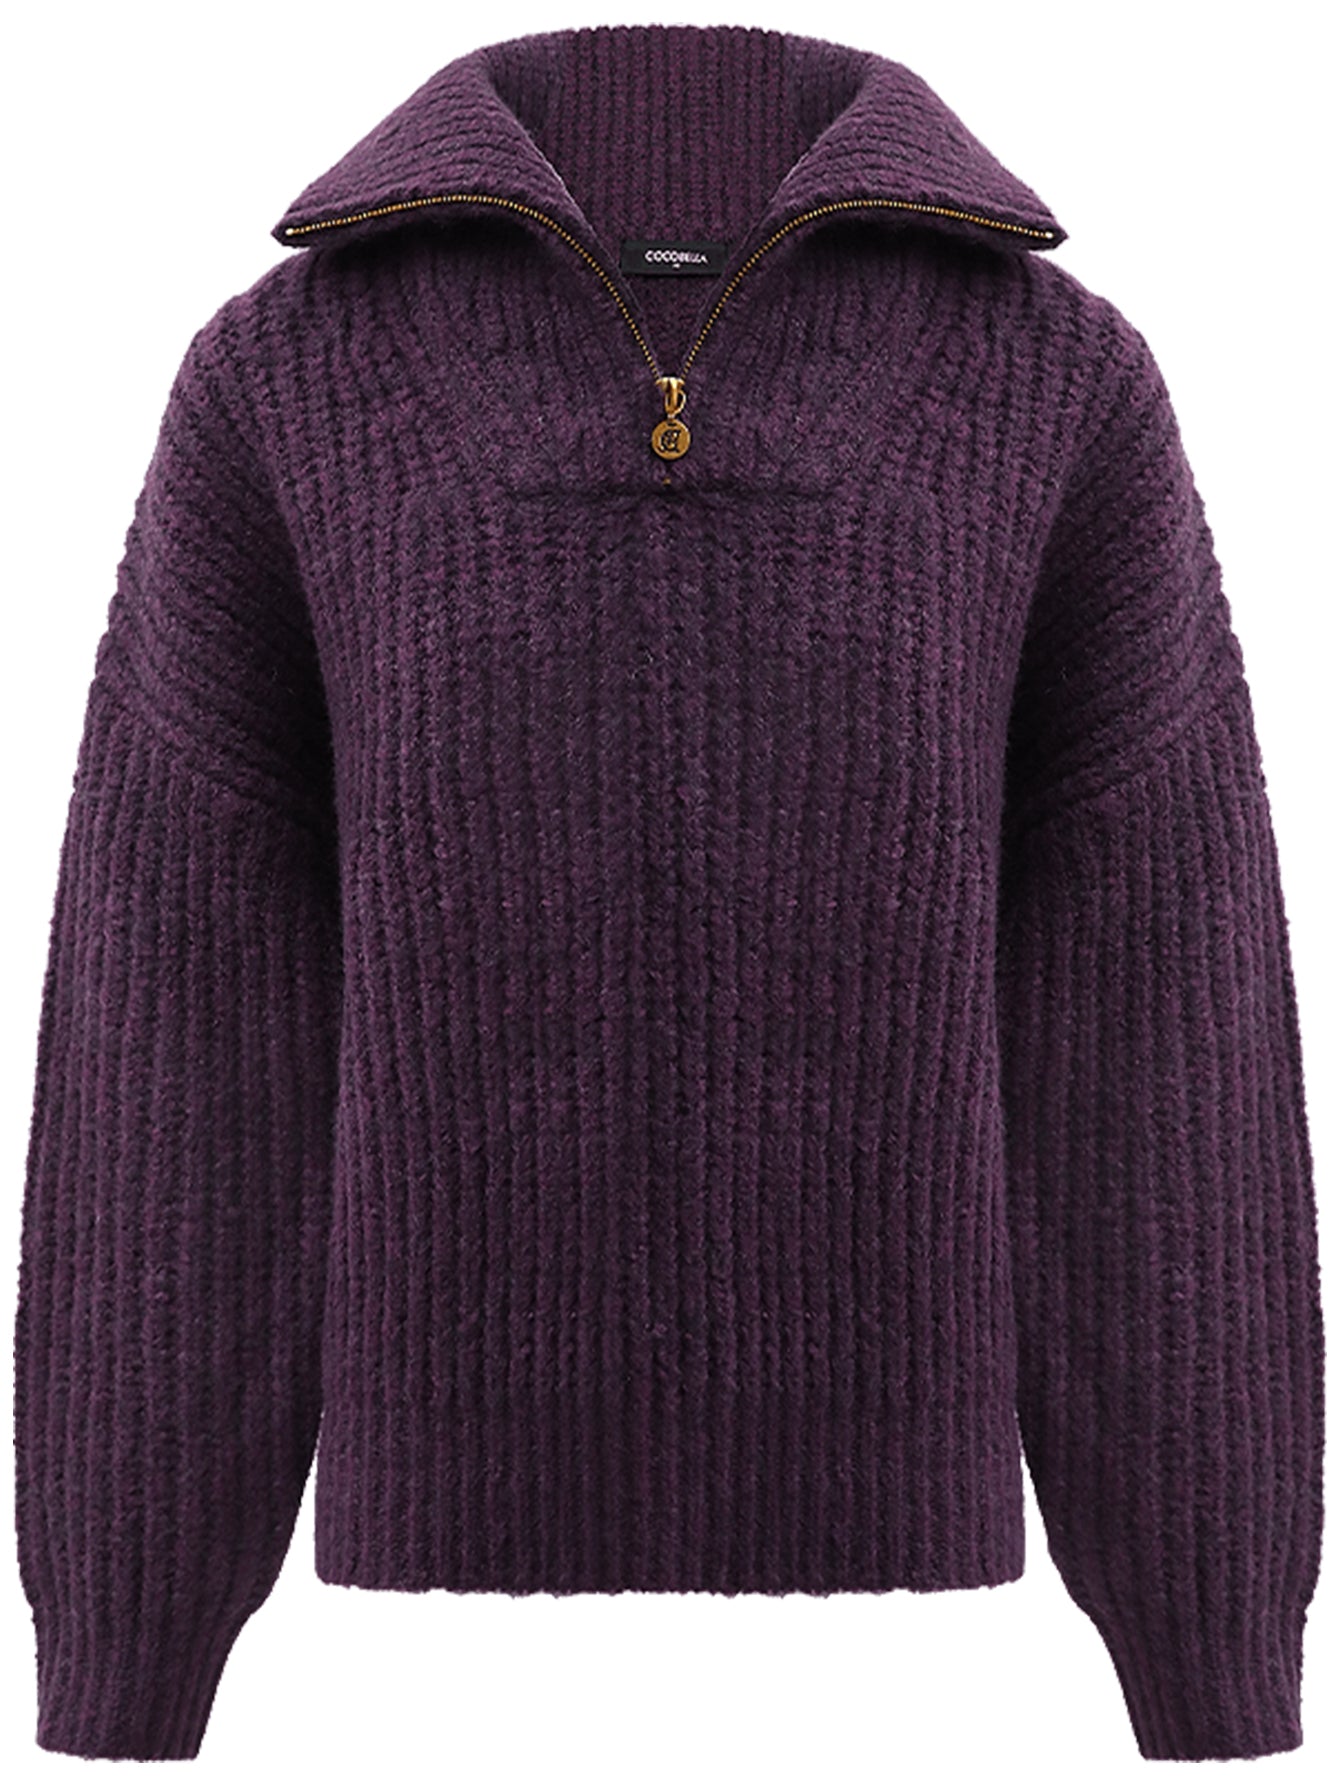 retro-half-zip-purple-knit-top_all_purple_4.jpg